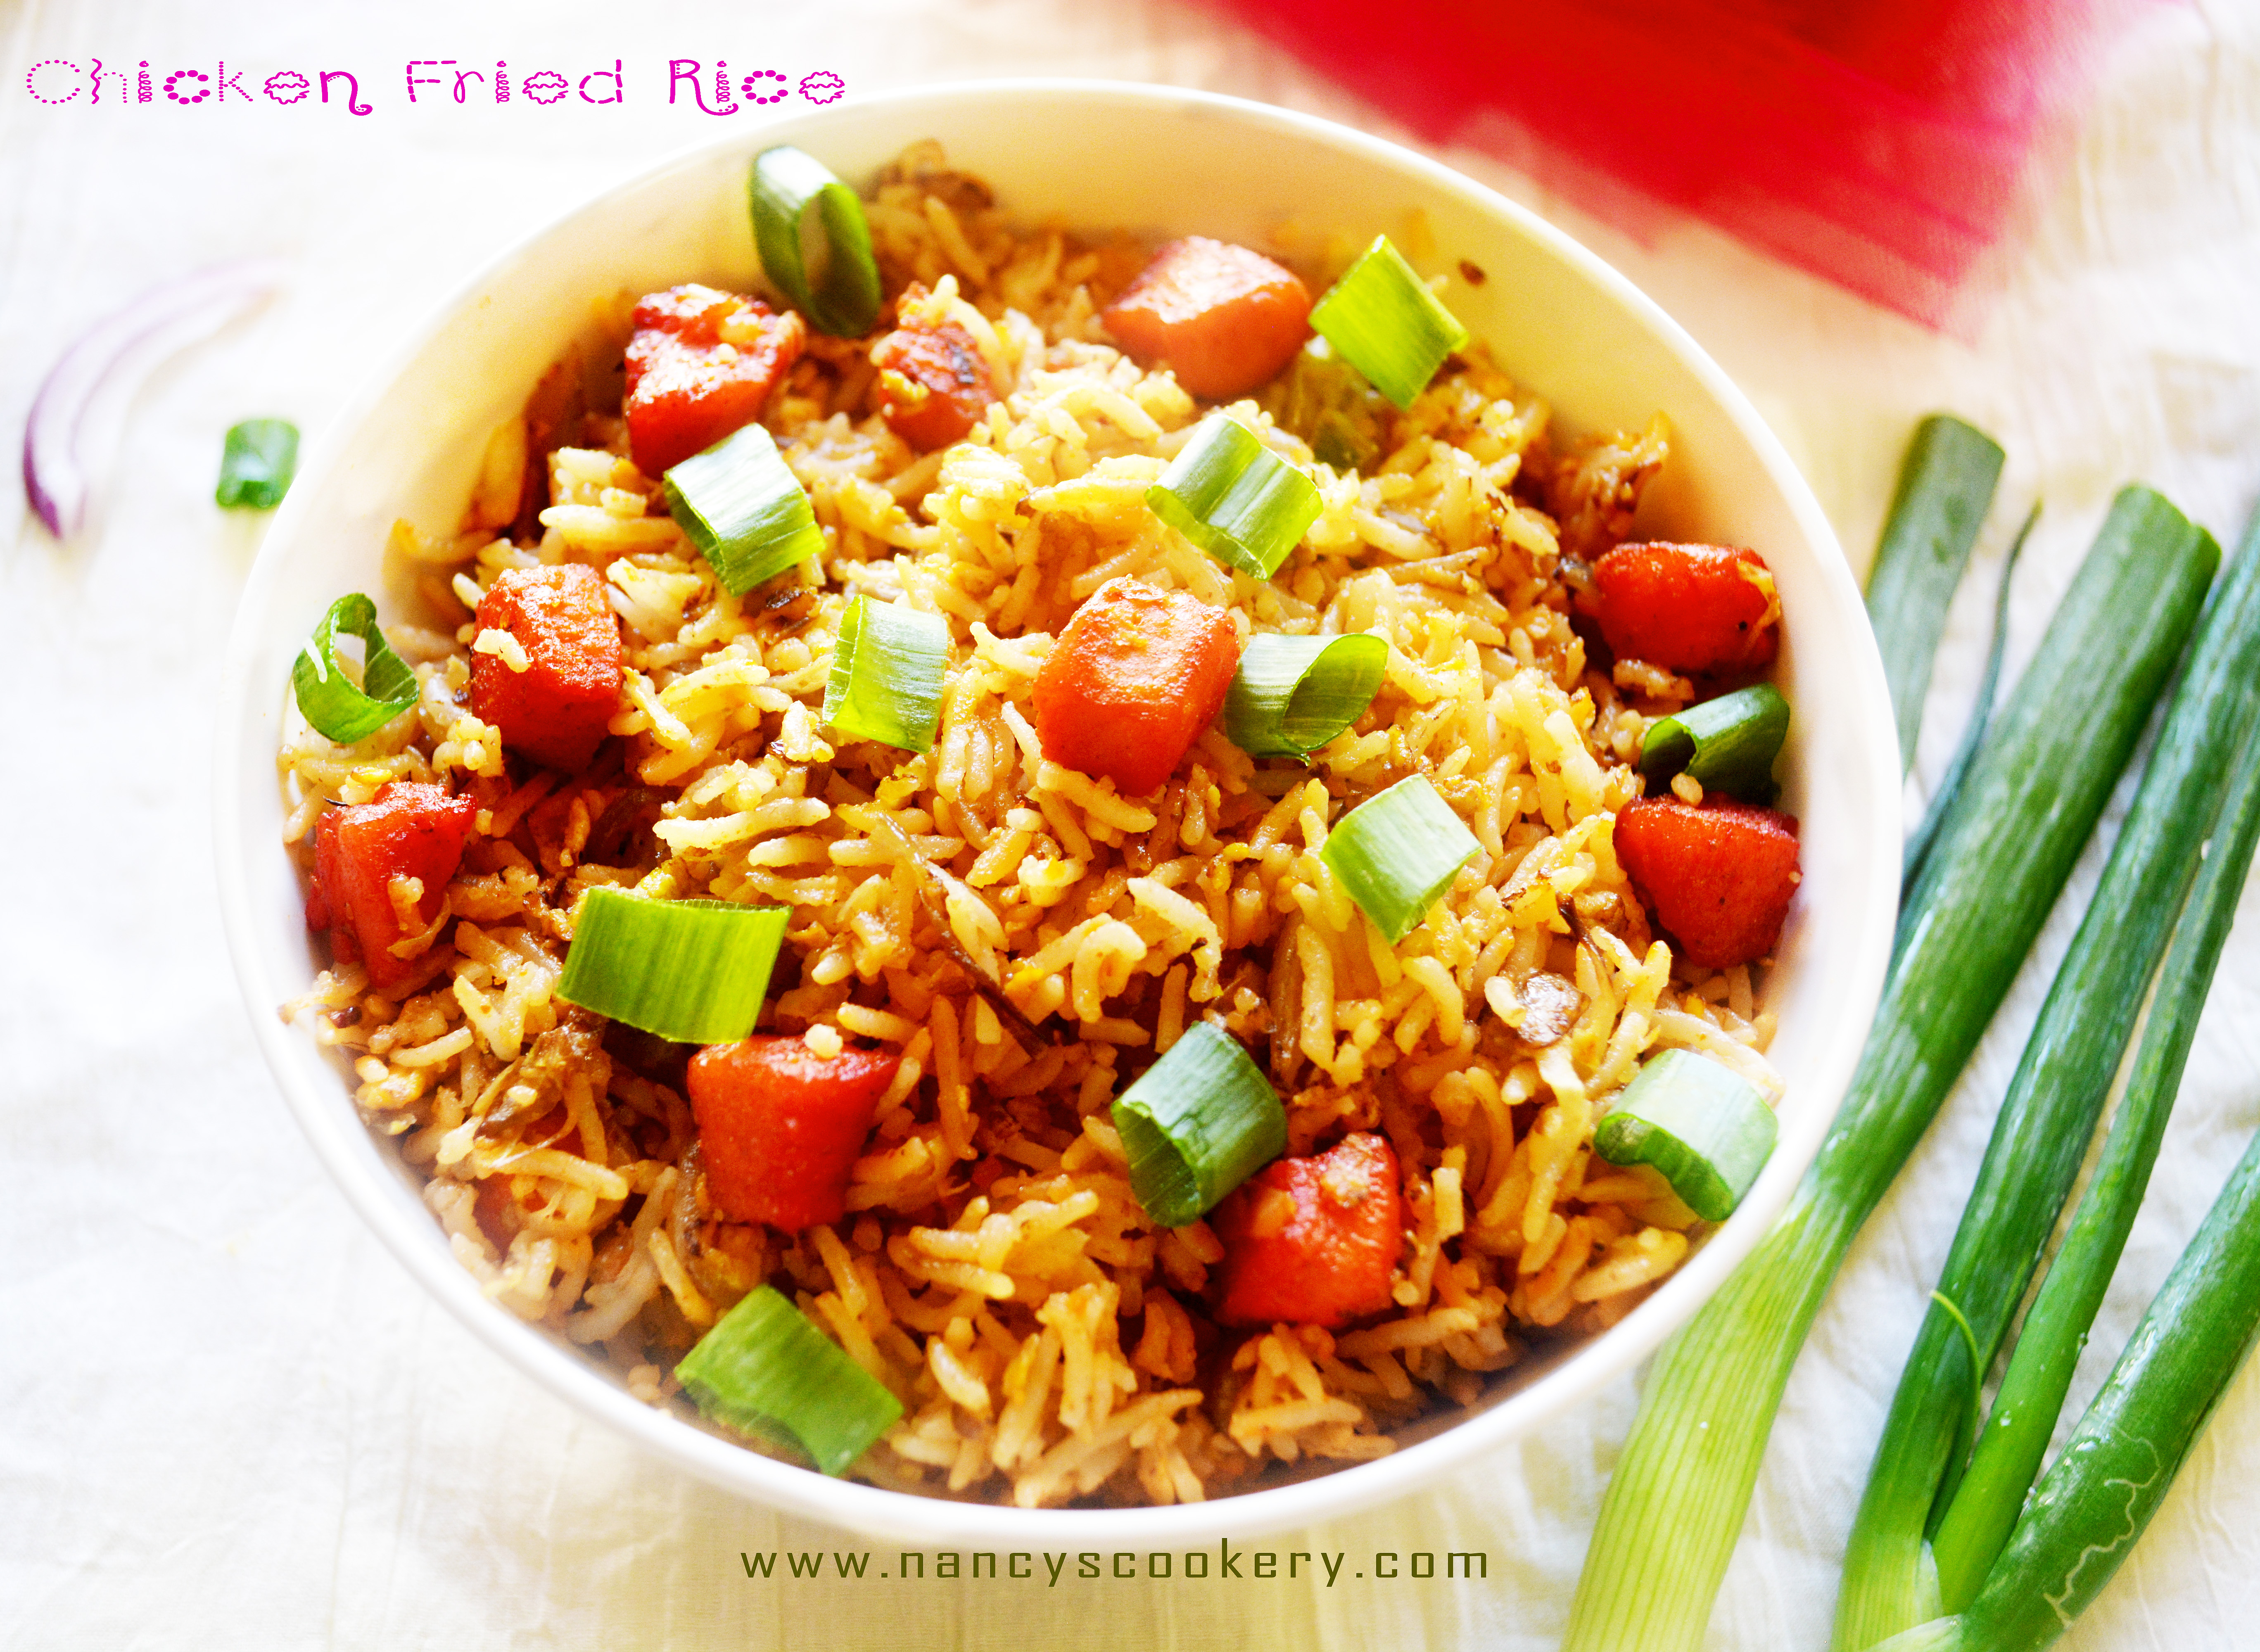 Chicken Fried Rice - Chennai street food style